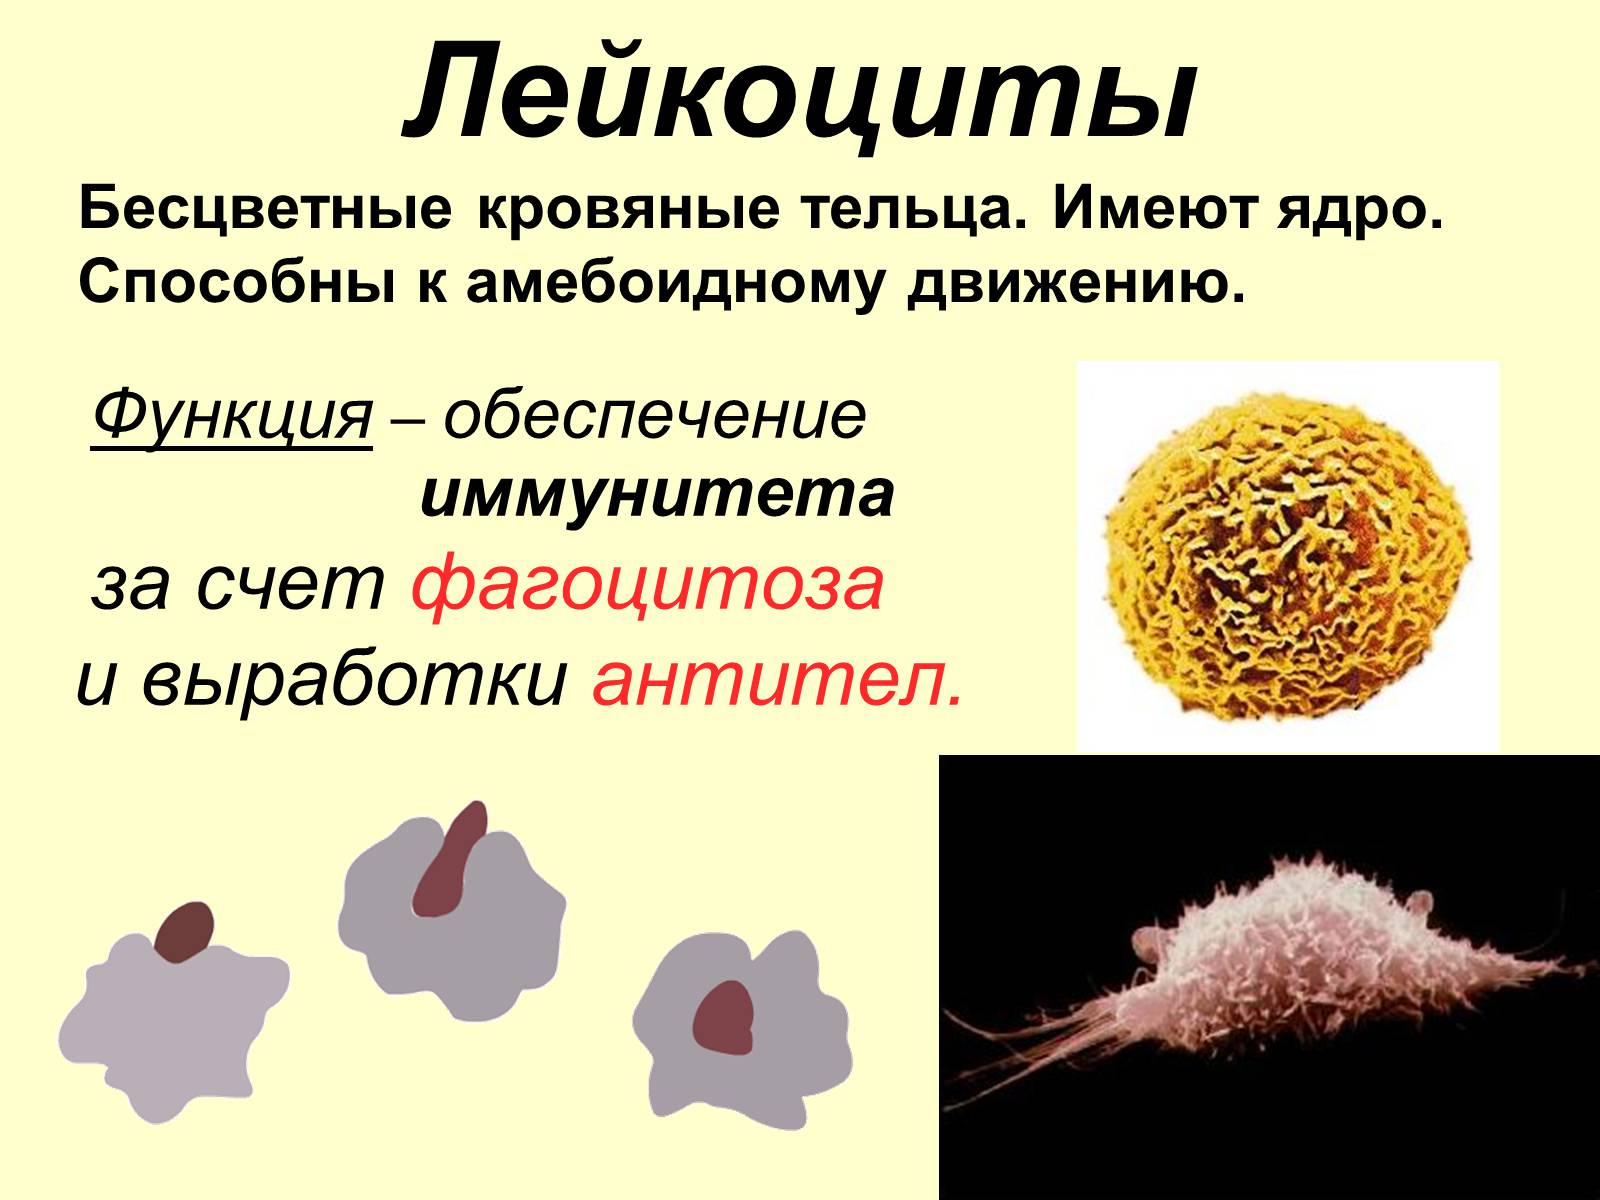 Способны к фагоцитозу амебоидному движению. Лейкоциты. Лейкоциты способные к амебоидному движению. Лейкоциты это. Лейкоциты способны.